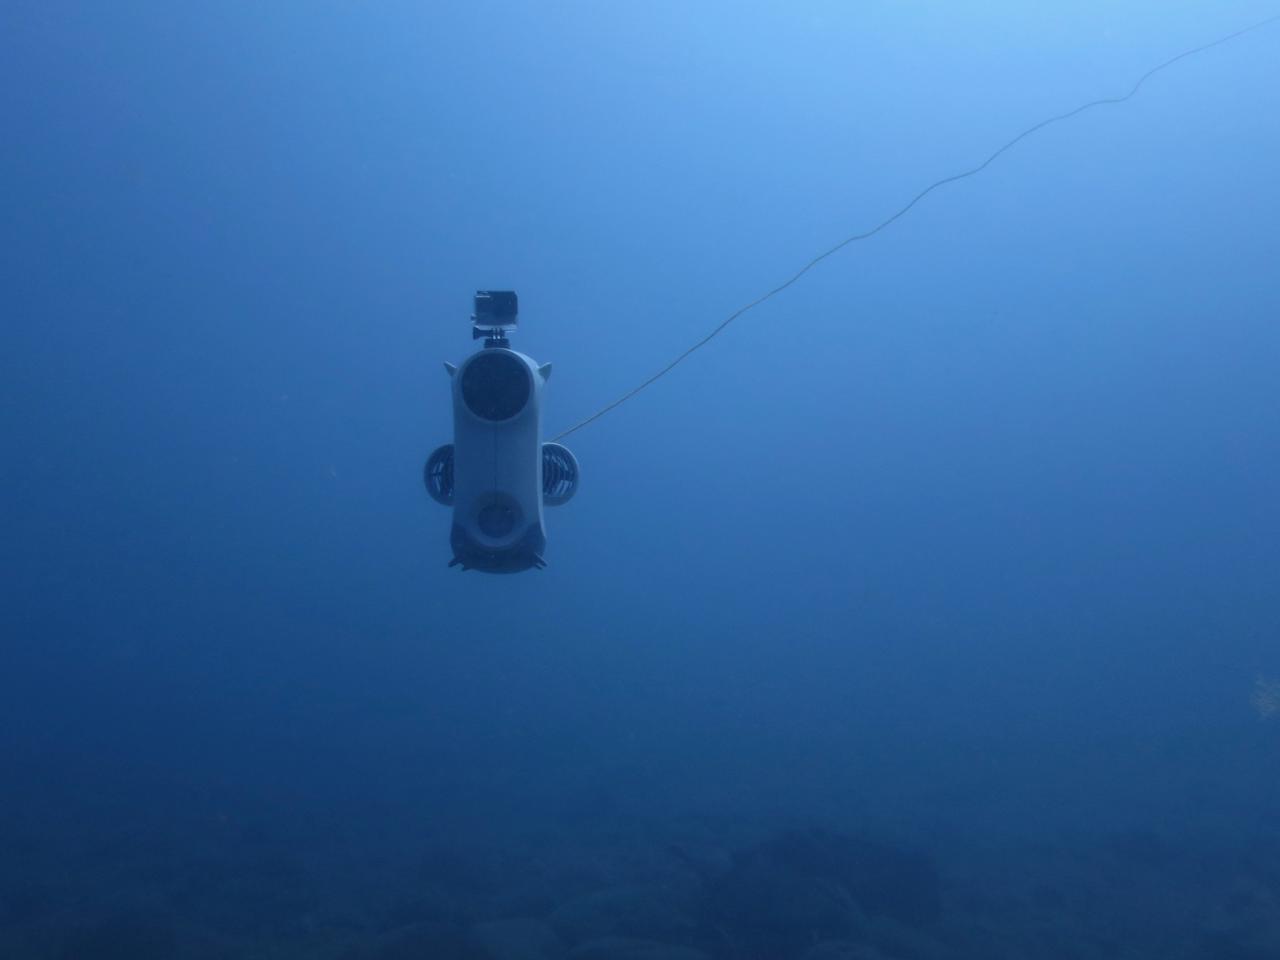 Blueye underwater drone into the blue